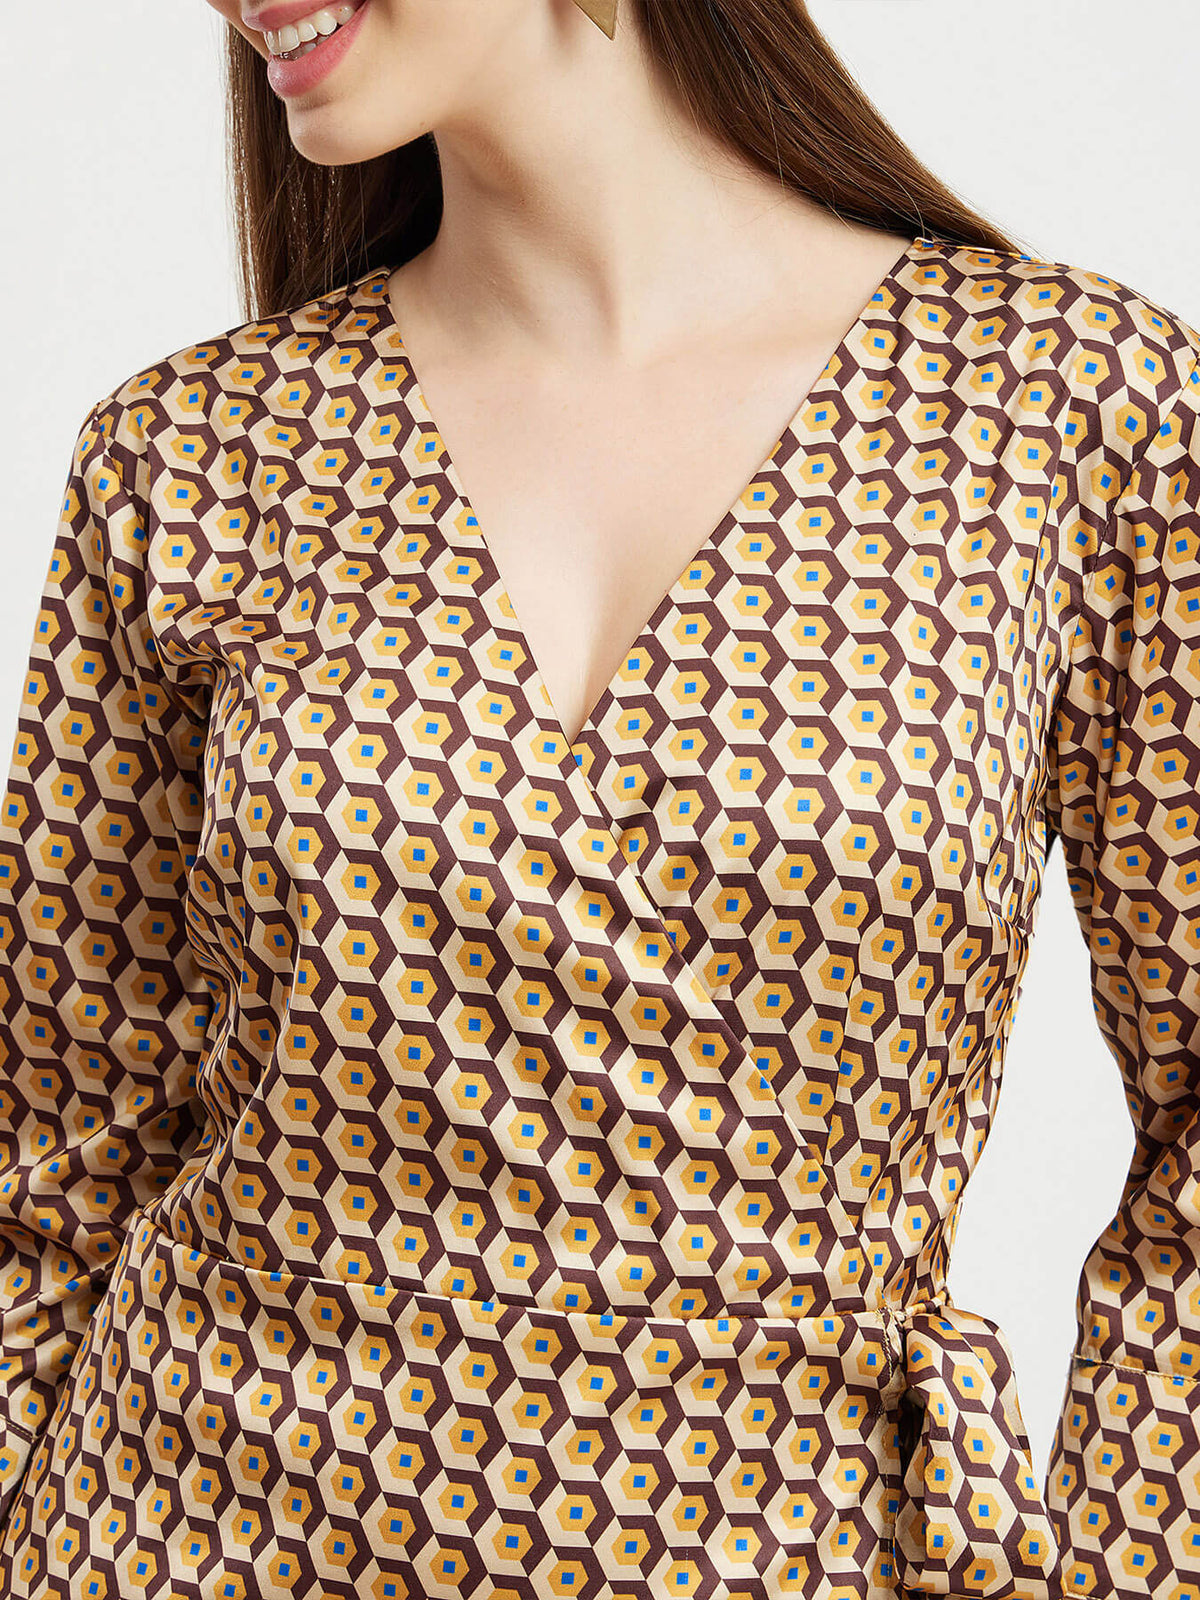 Satin Geometric Print Wrap Dress - Brown And Beige